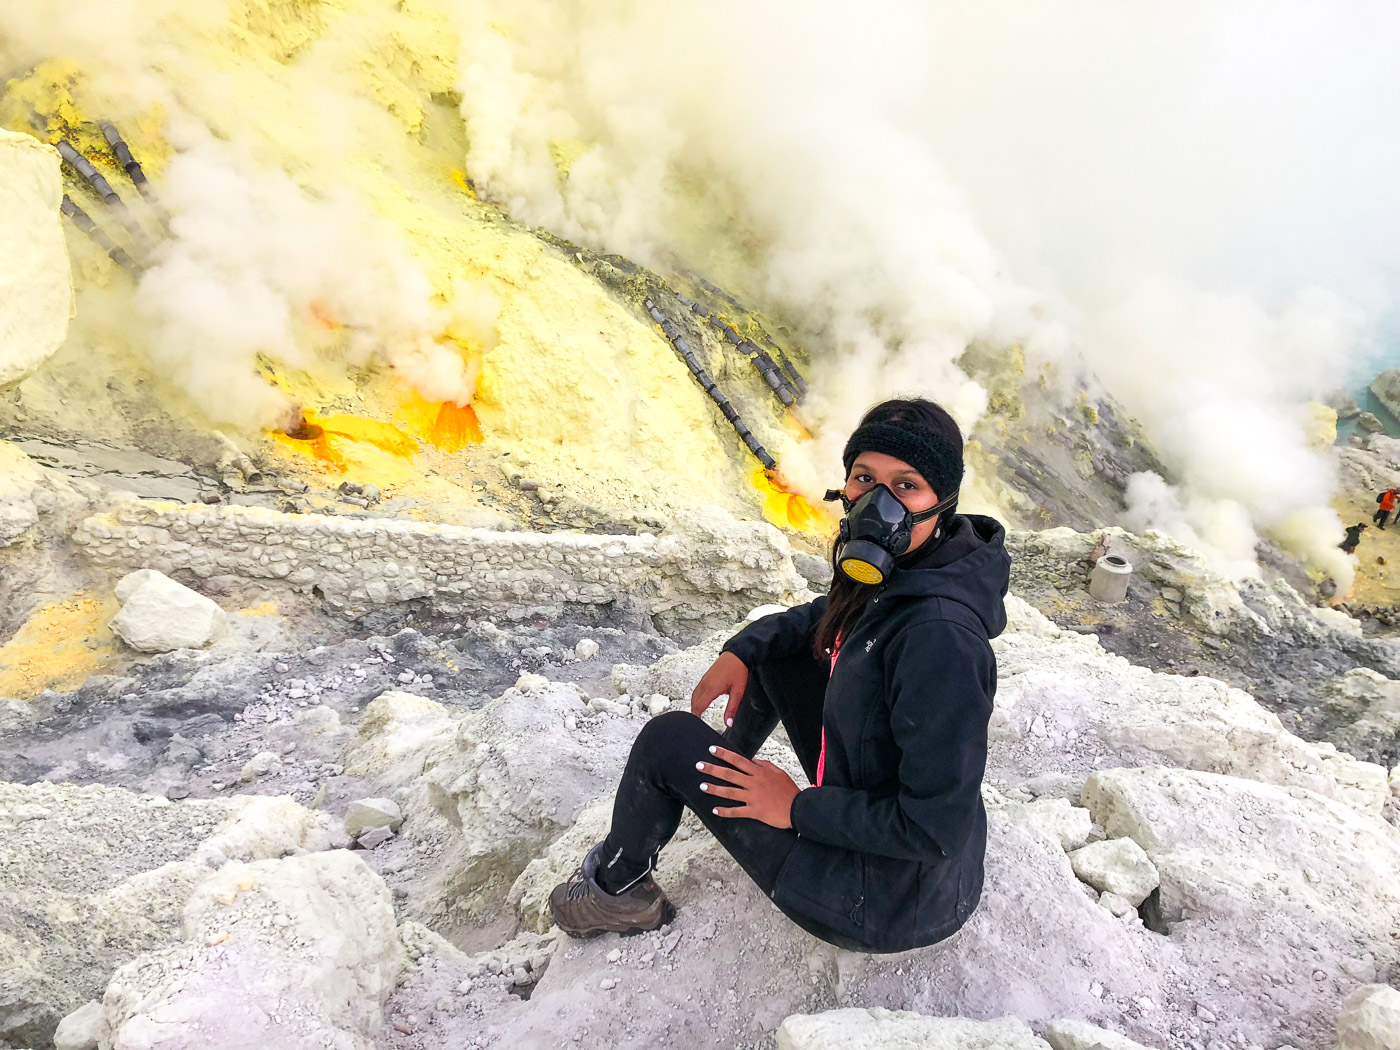 Mount_Bromo_Java_Indonesia_Active_Volcano_Hiking_Trekking_Solo_Travel_Blogger_The_Sassy_Pilgrim_Travel_Tips_Guide_Kawah_Ijen_Sulphuric_Lakes_Sunrise